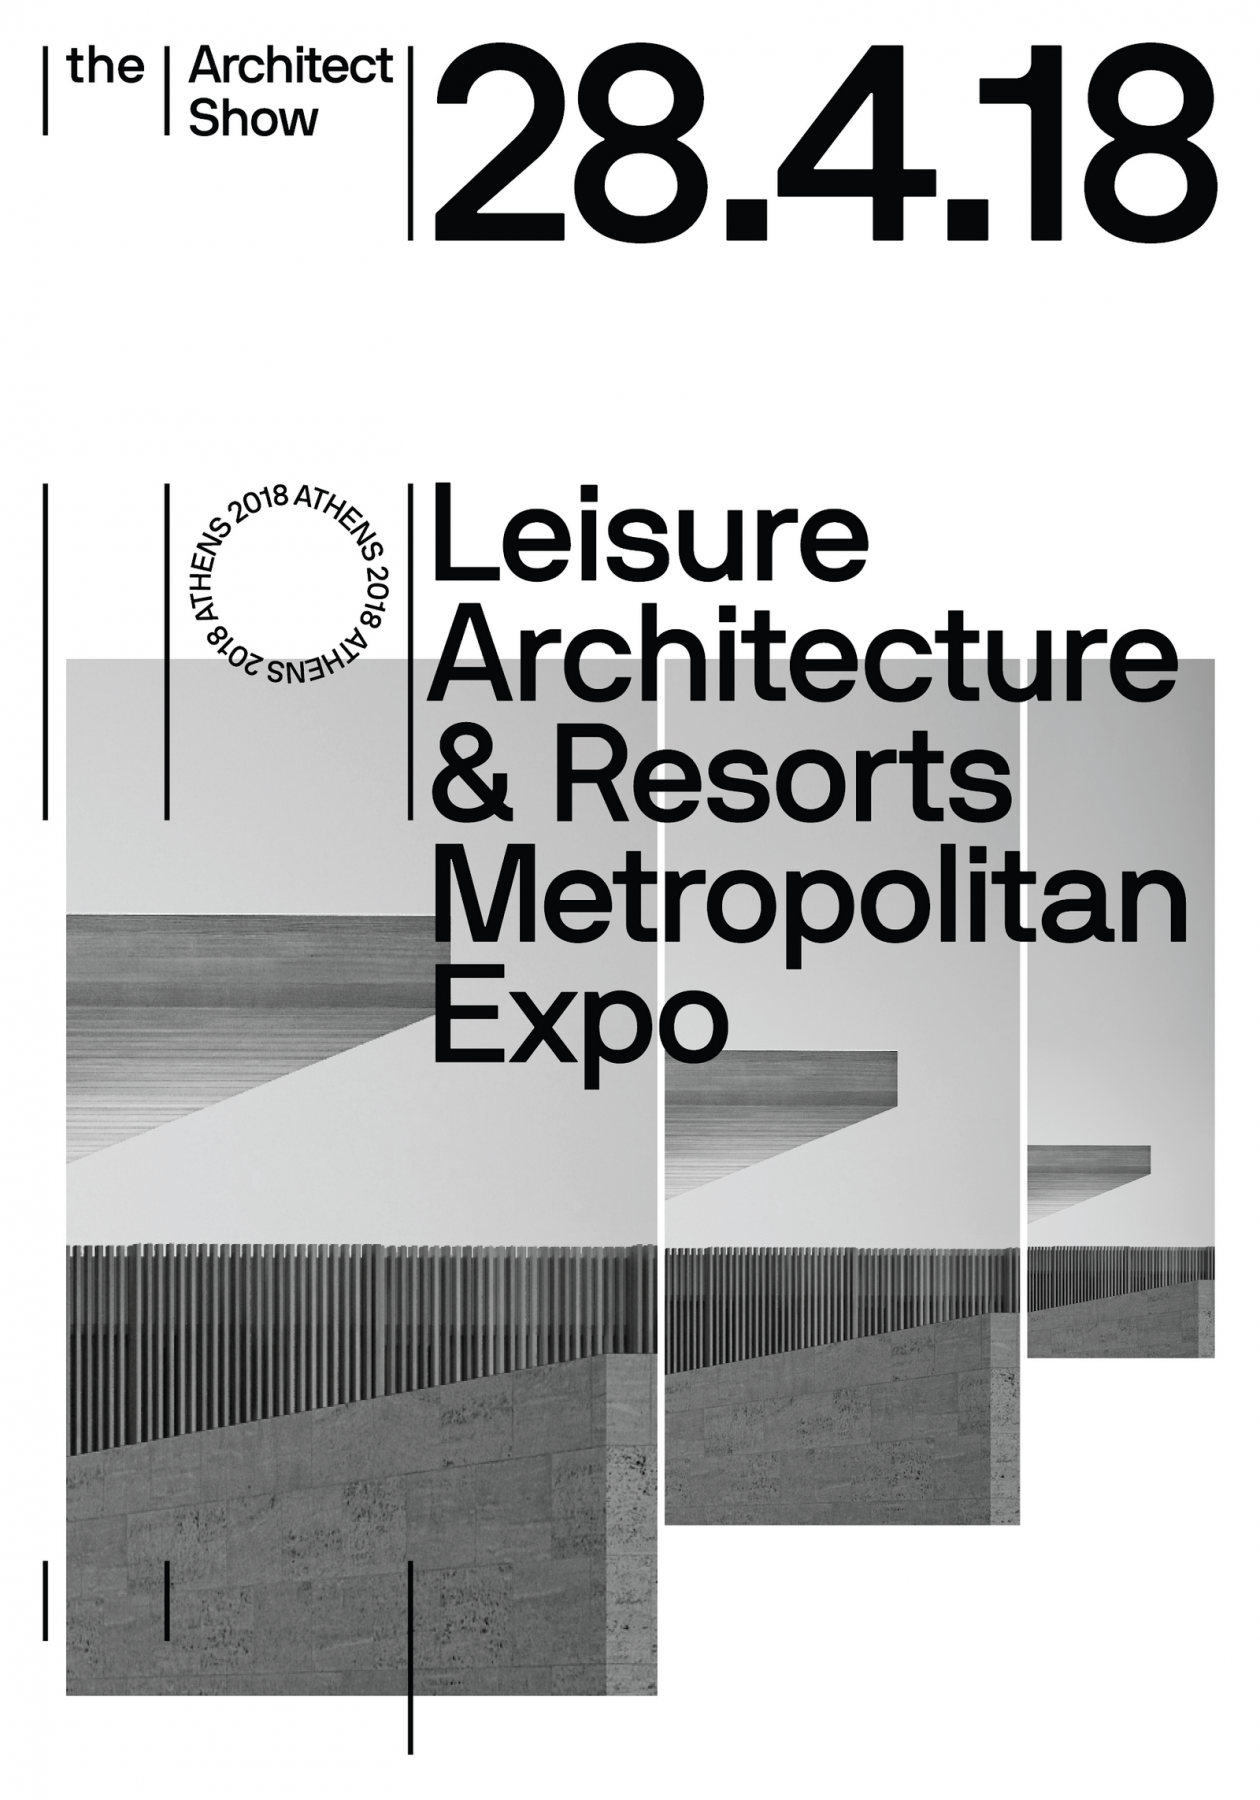 Archisearch Με εξαιρετική επιτυχία πραγματοποιήθηκε το μεγαλύτερο συνέδριο με θέμα Leisure Architecture & Resorts  | THE ARCHITECT SHOW